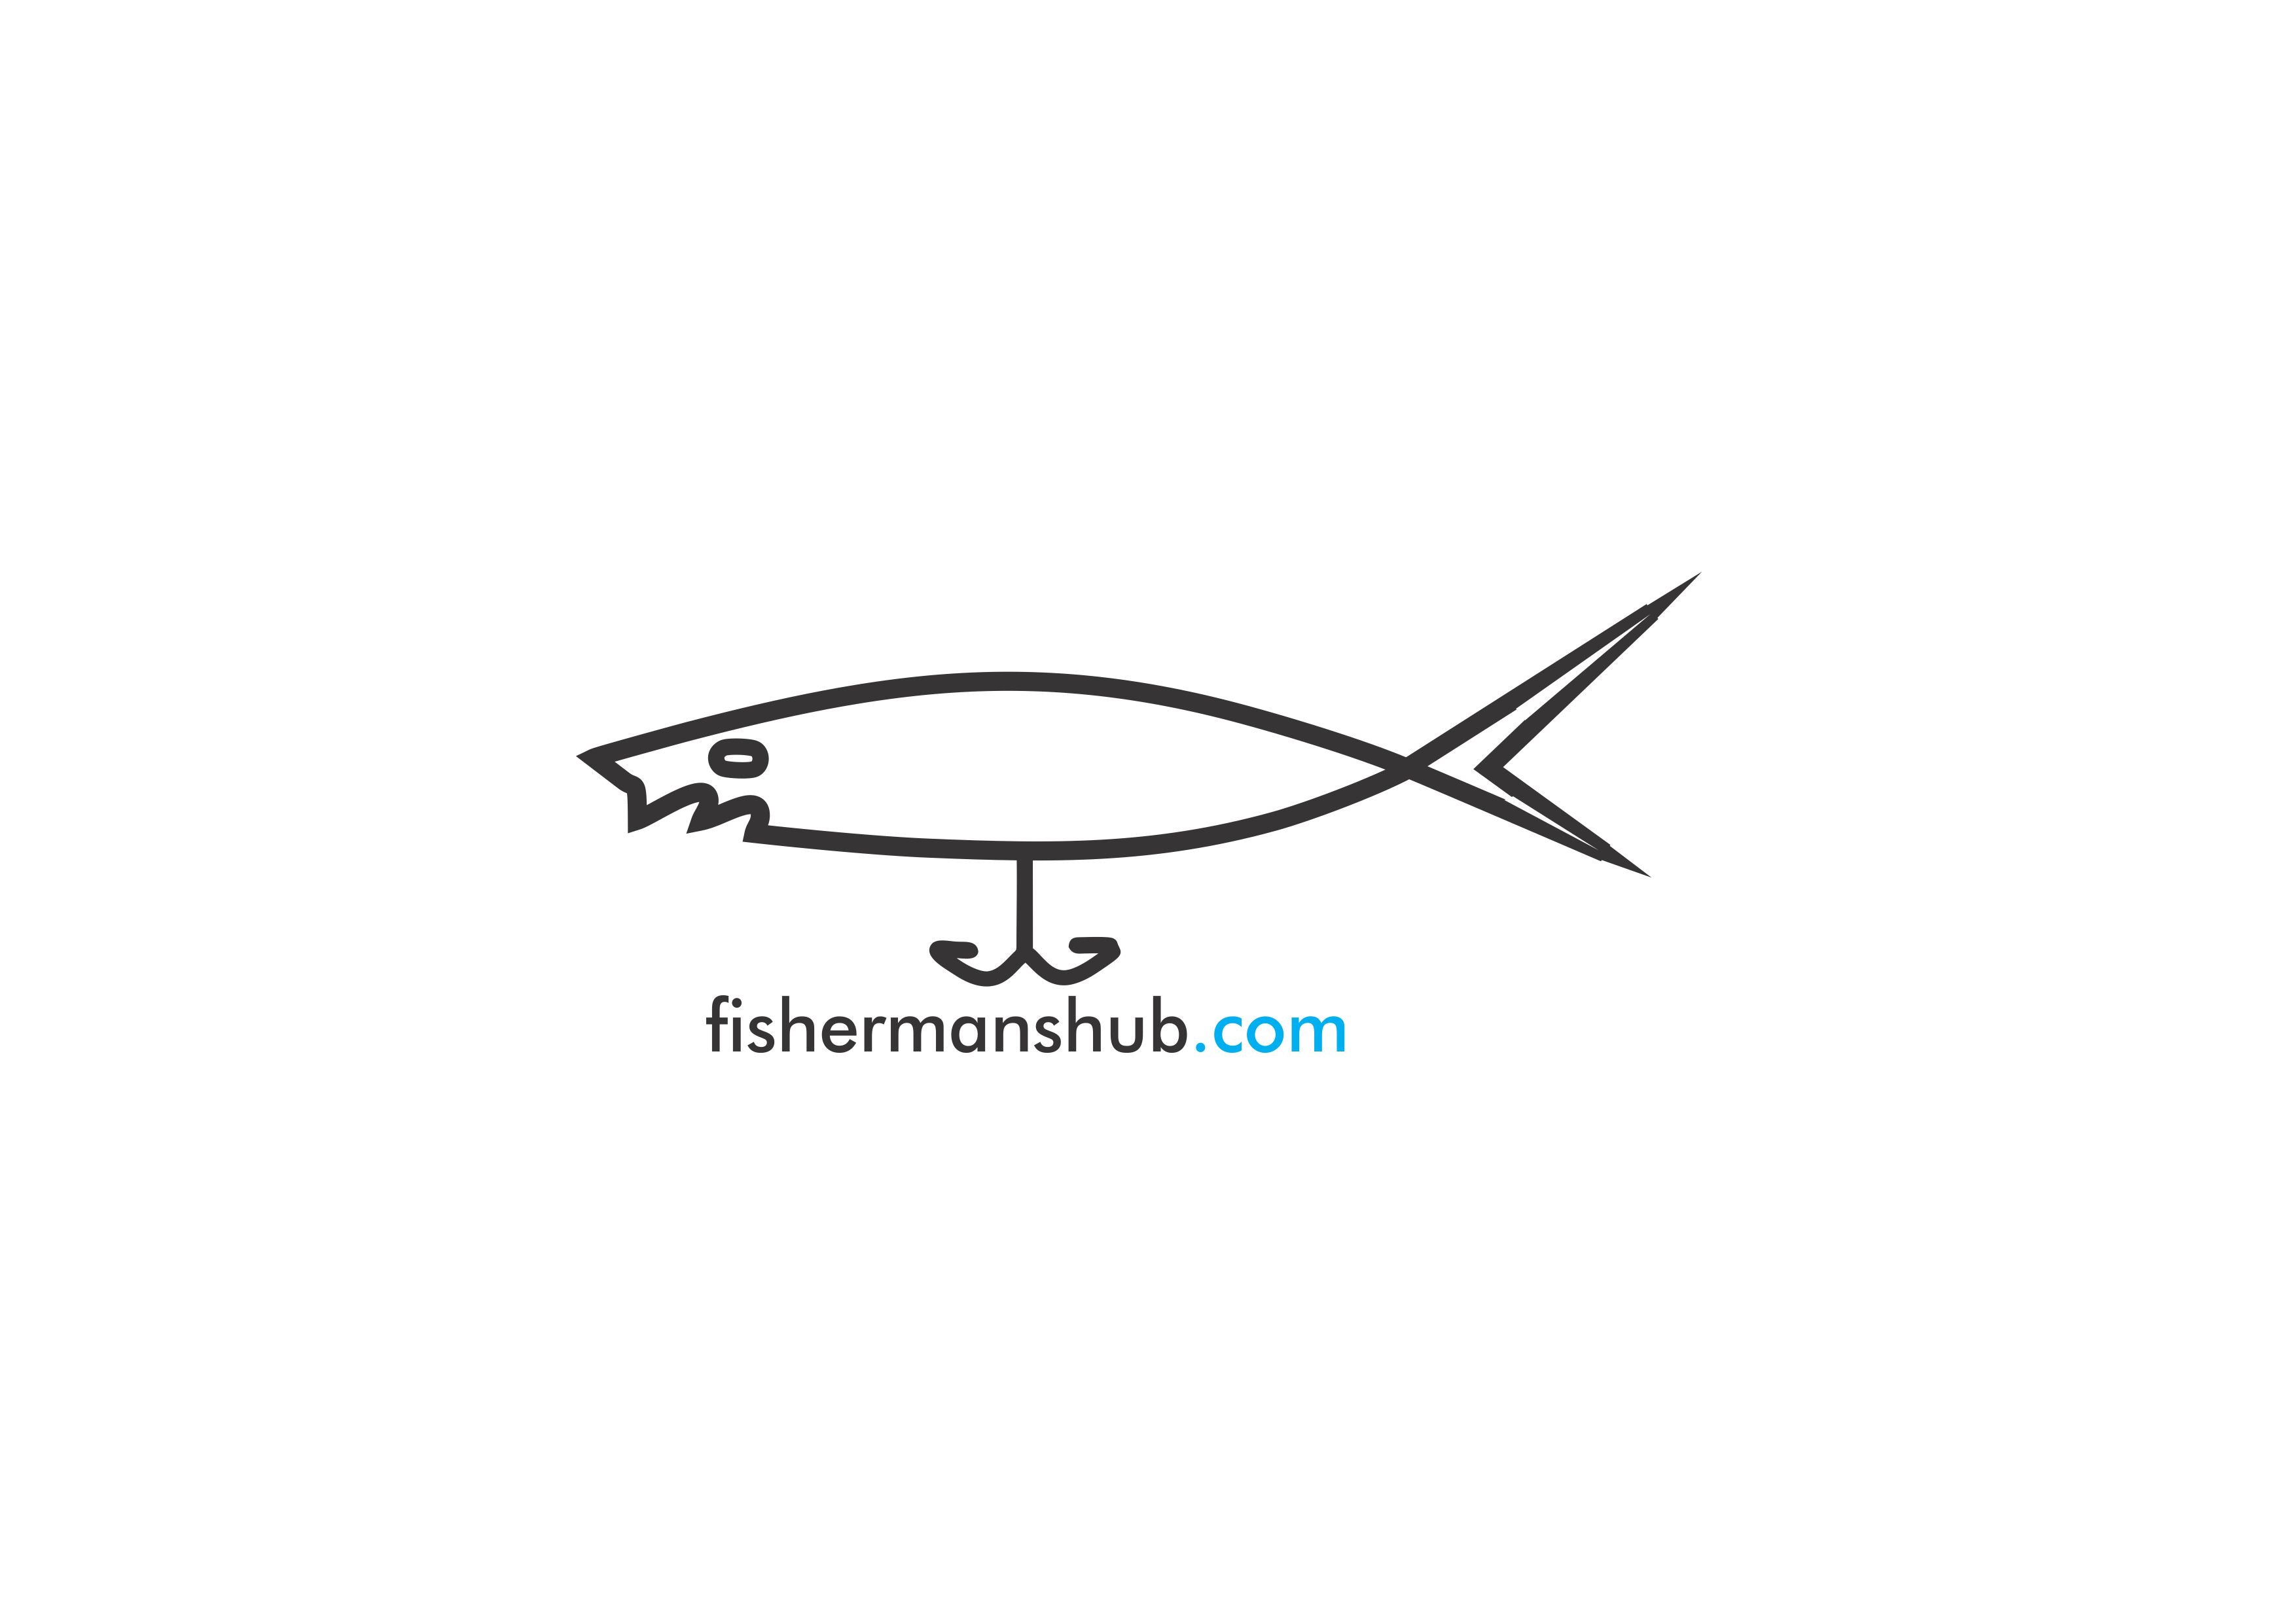 Fishermanshub_Zoomed_Out_website_logo-1_